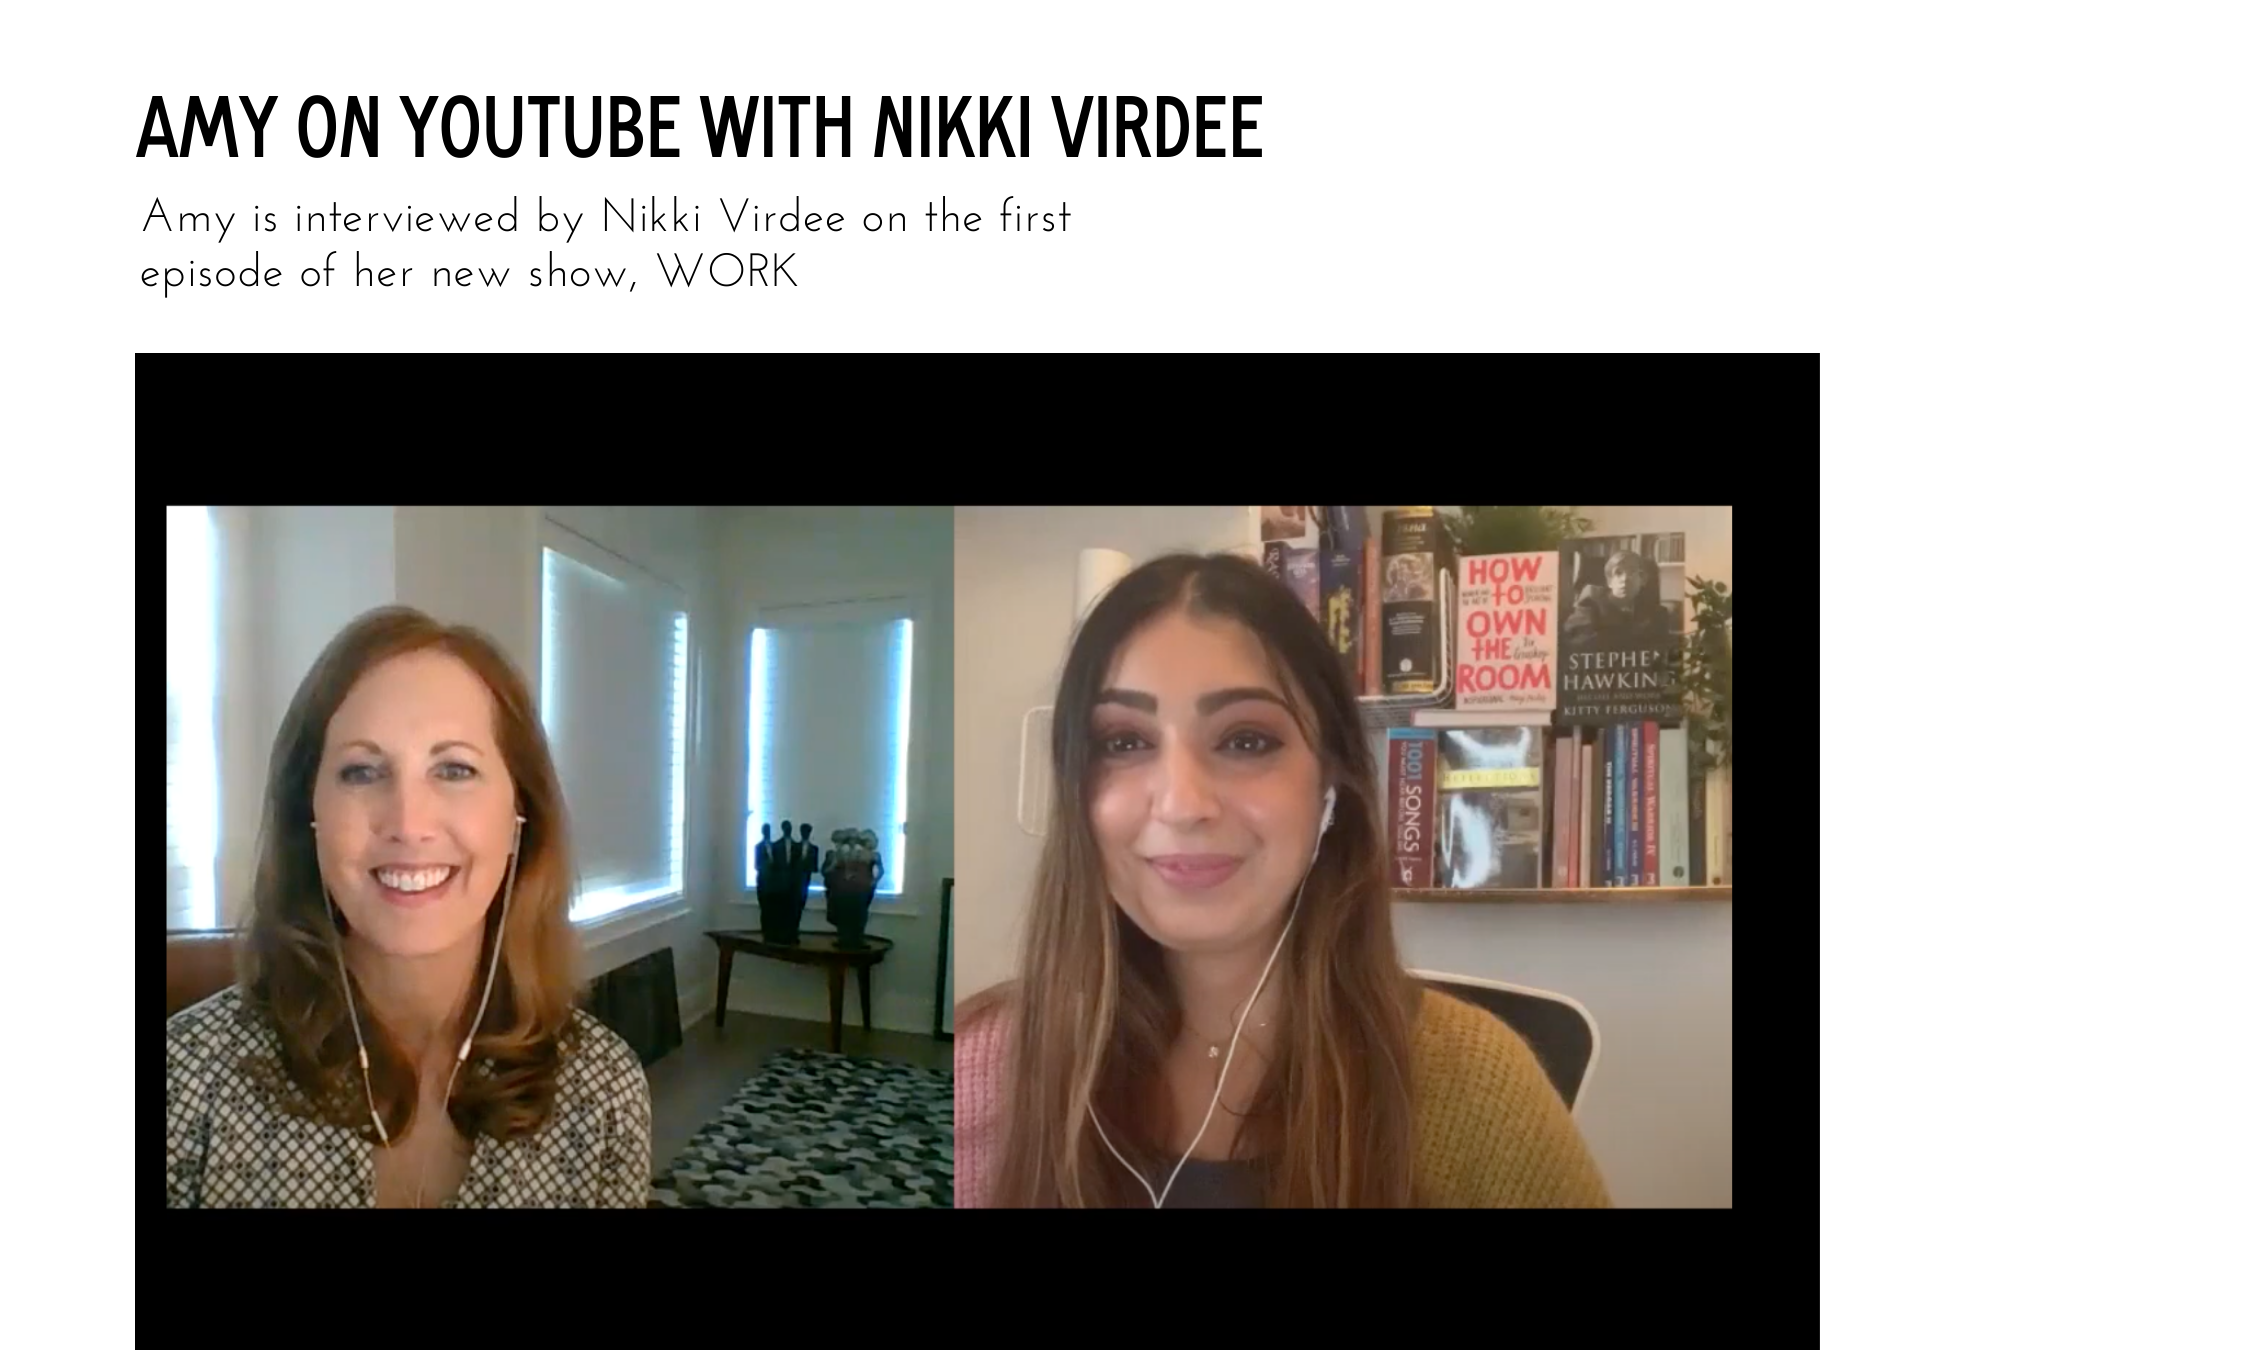 Hear Amy on the new YouTube show, WORK, with Nikki Virdee